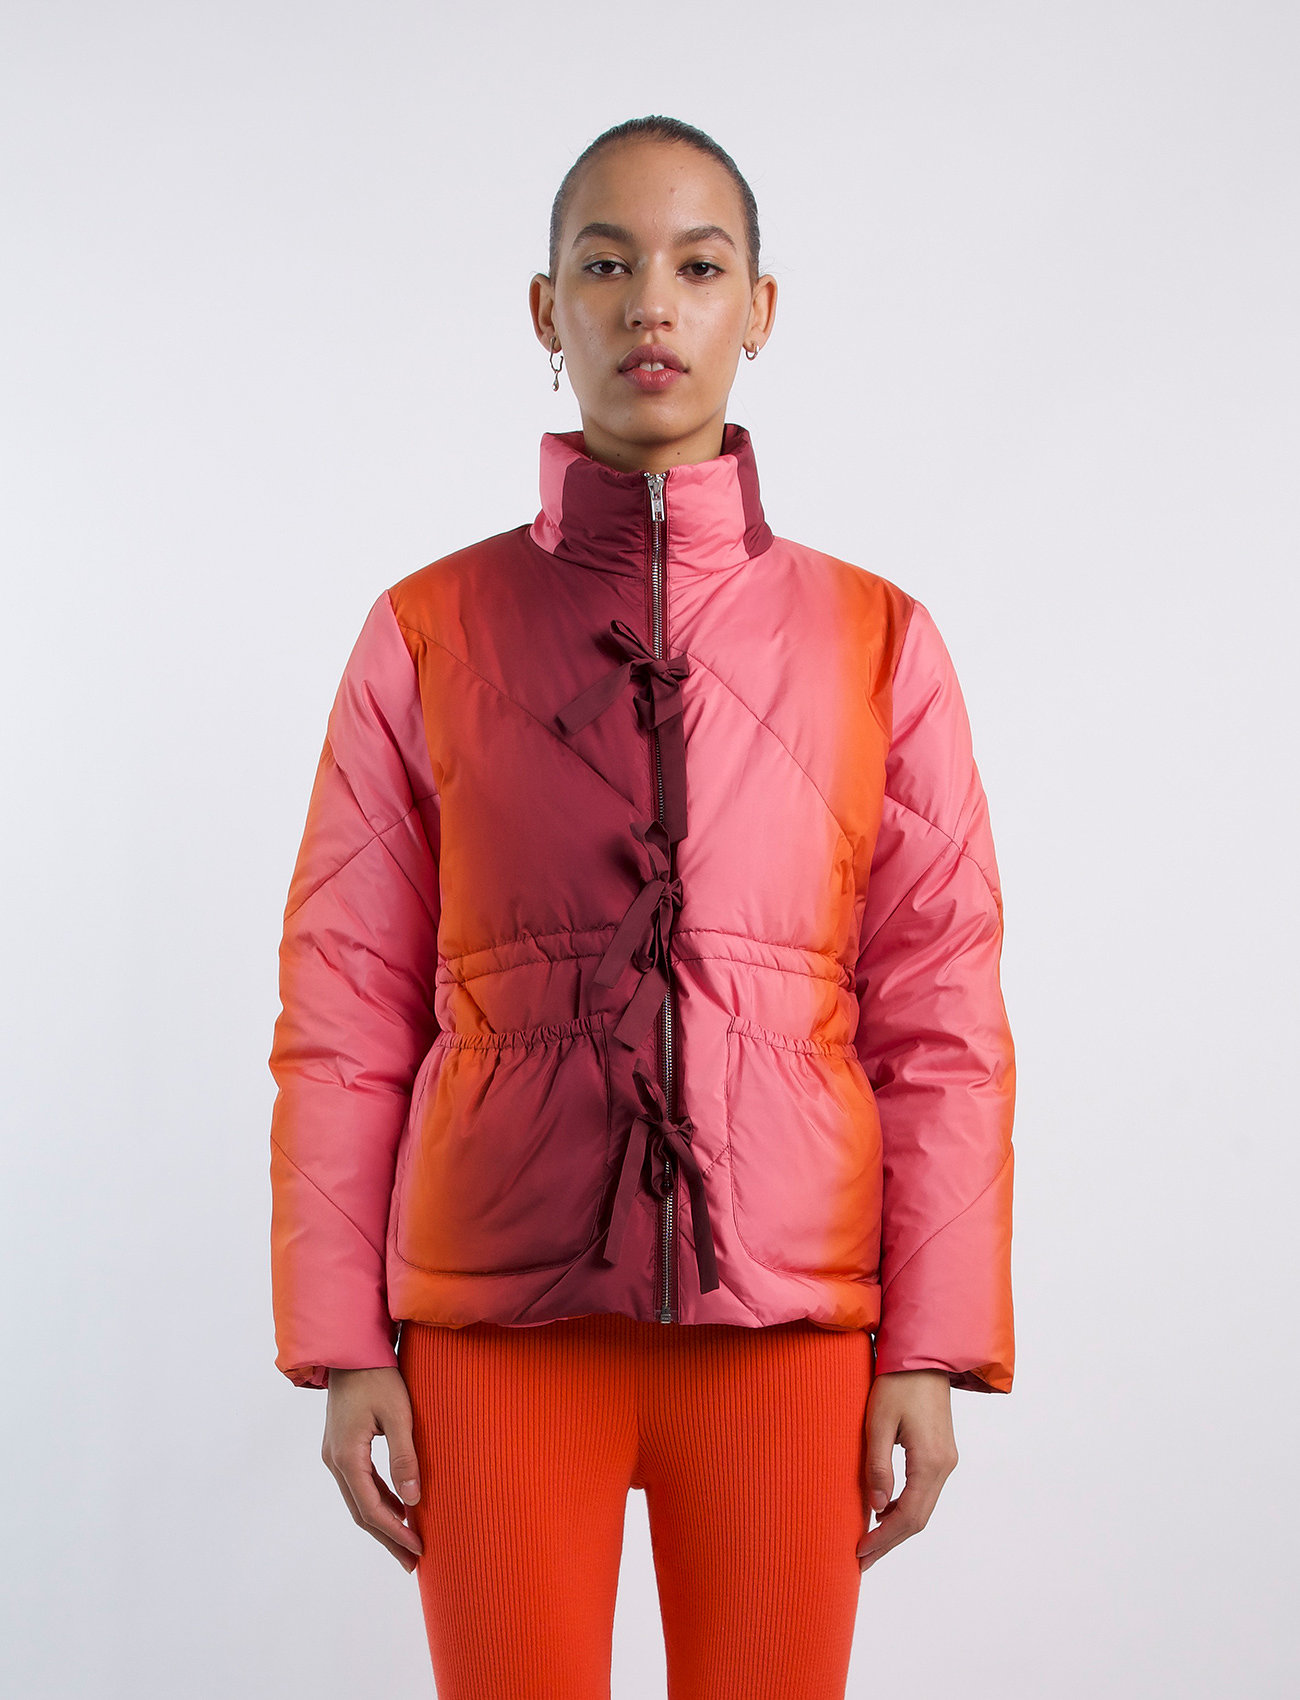 Hosbjerg Hava Sunset Jacket - 148.07 €. Buy Down- & padded jackets from Hosbjerg online Boozt.com. Fast and easy returns